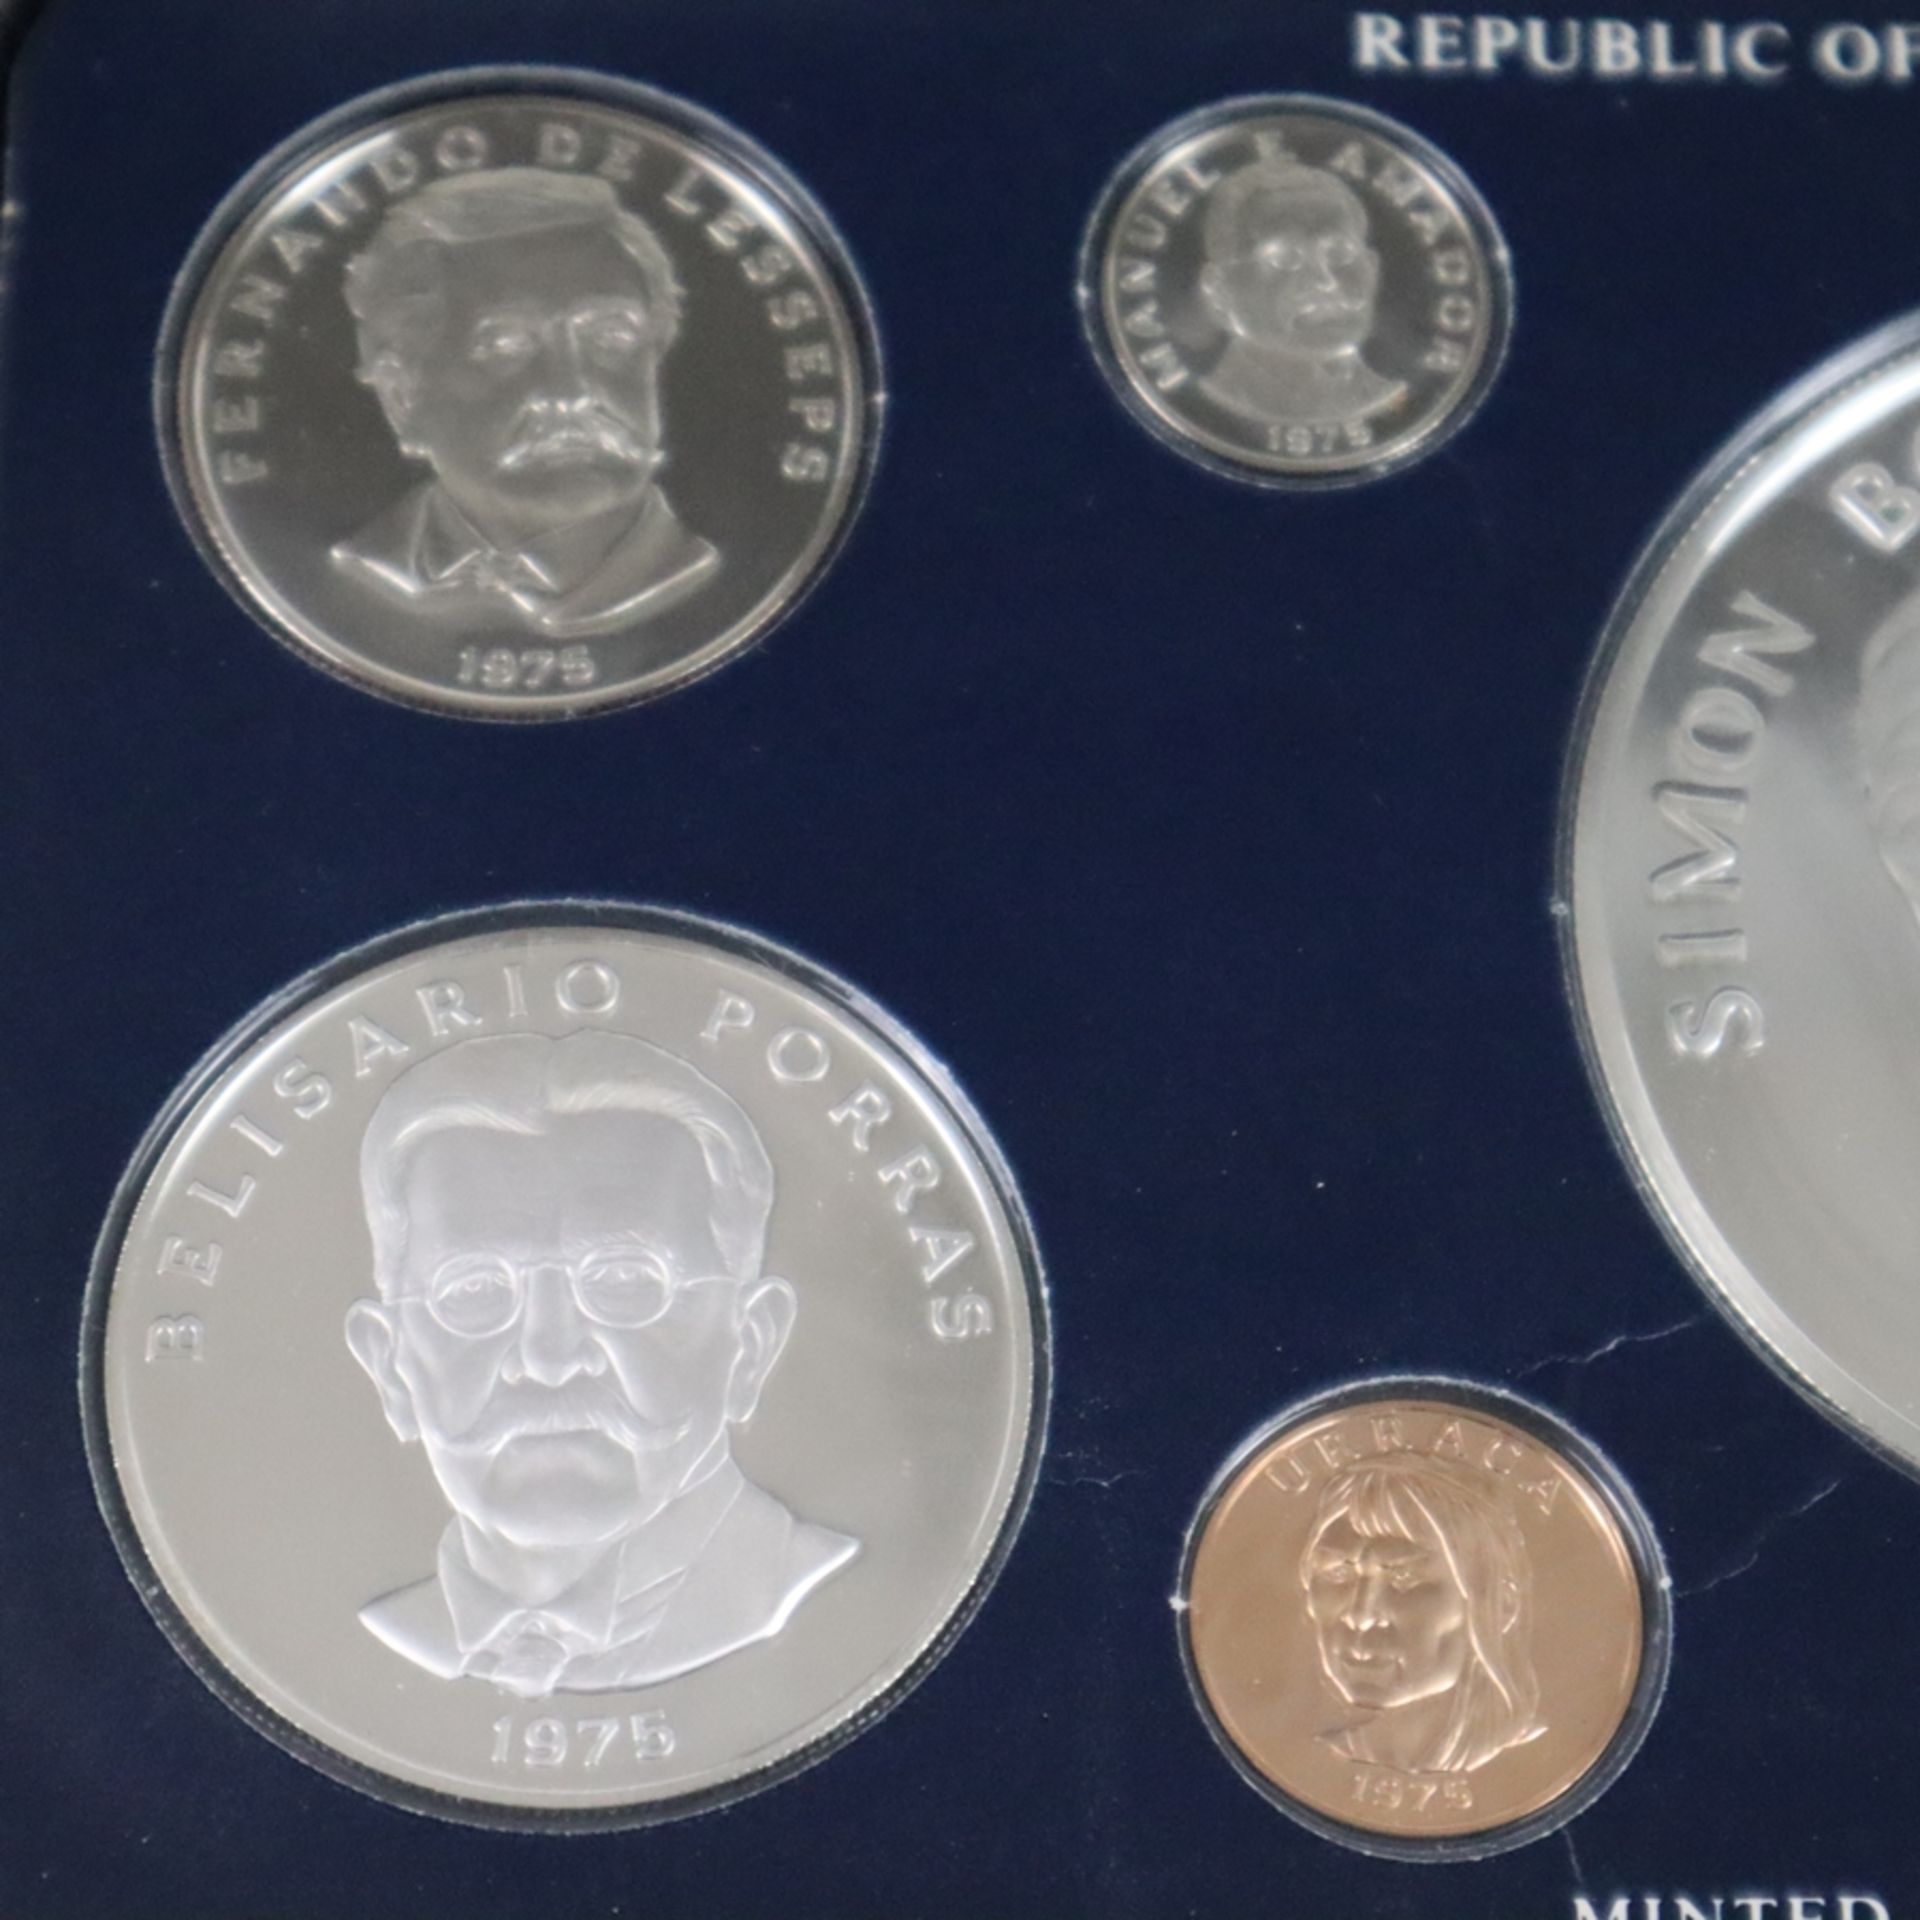 Münzset Republik of Panama 1975 - 925er Silber, Republik Of Panama Proof Set, Franklin Mint, 9 Münz - Bild 3 aus 5